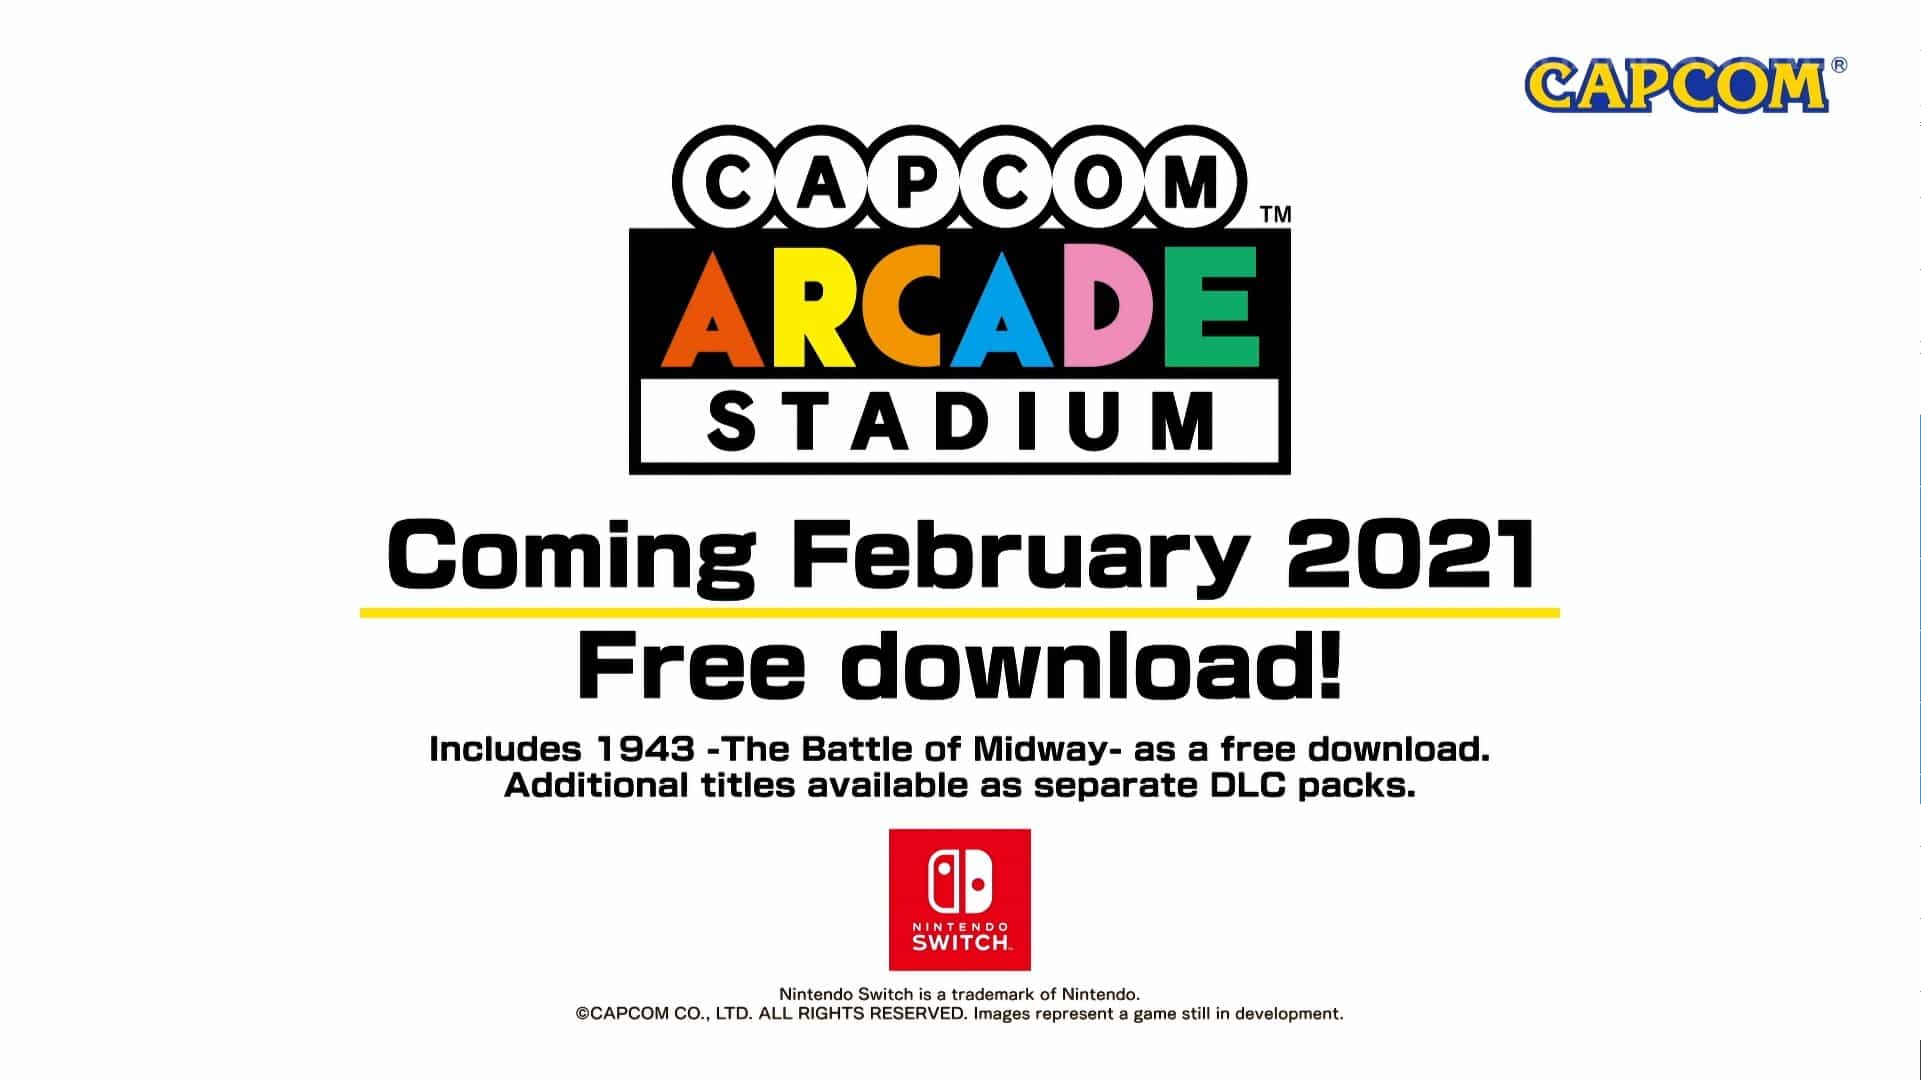 Capcom Arcade Stadium llegará como descarga gratuita en febrero de 2021 a Nintendo Switch